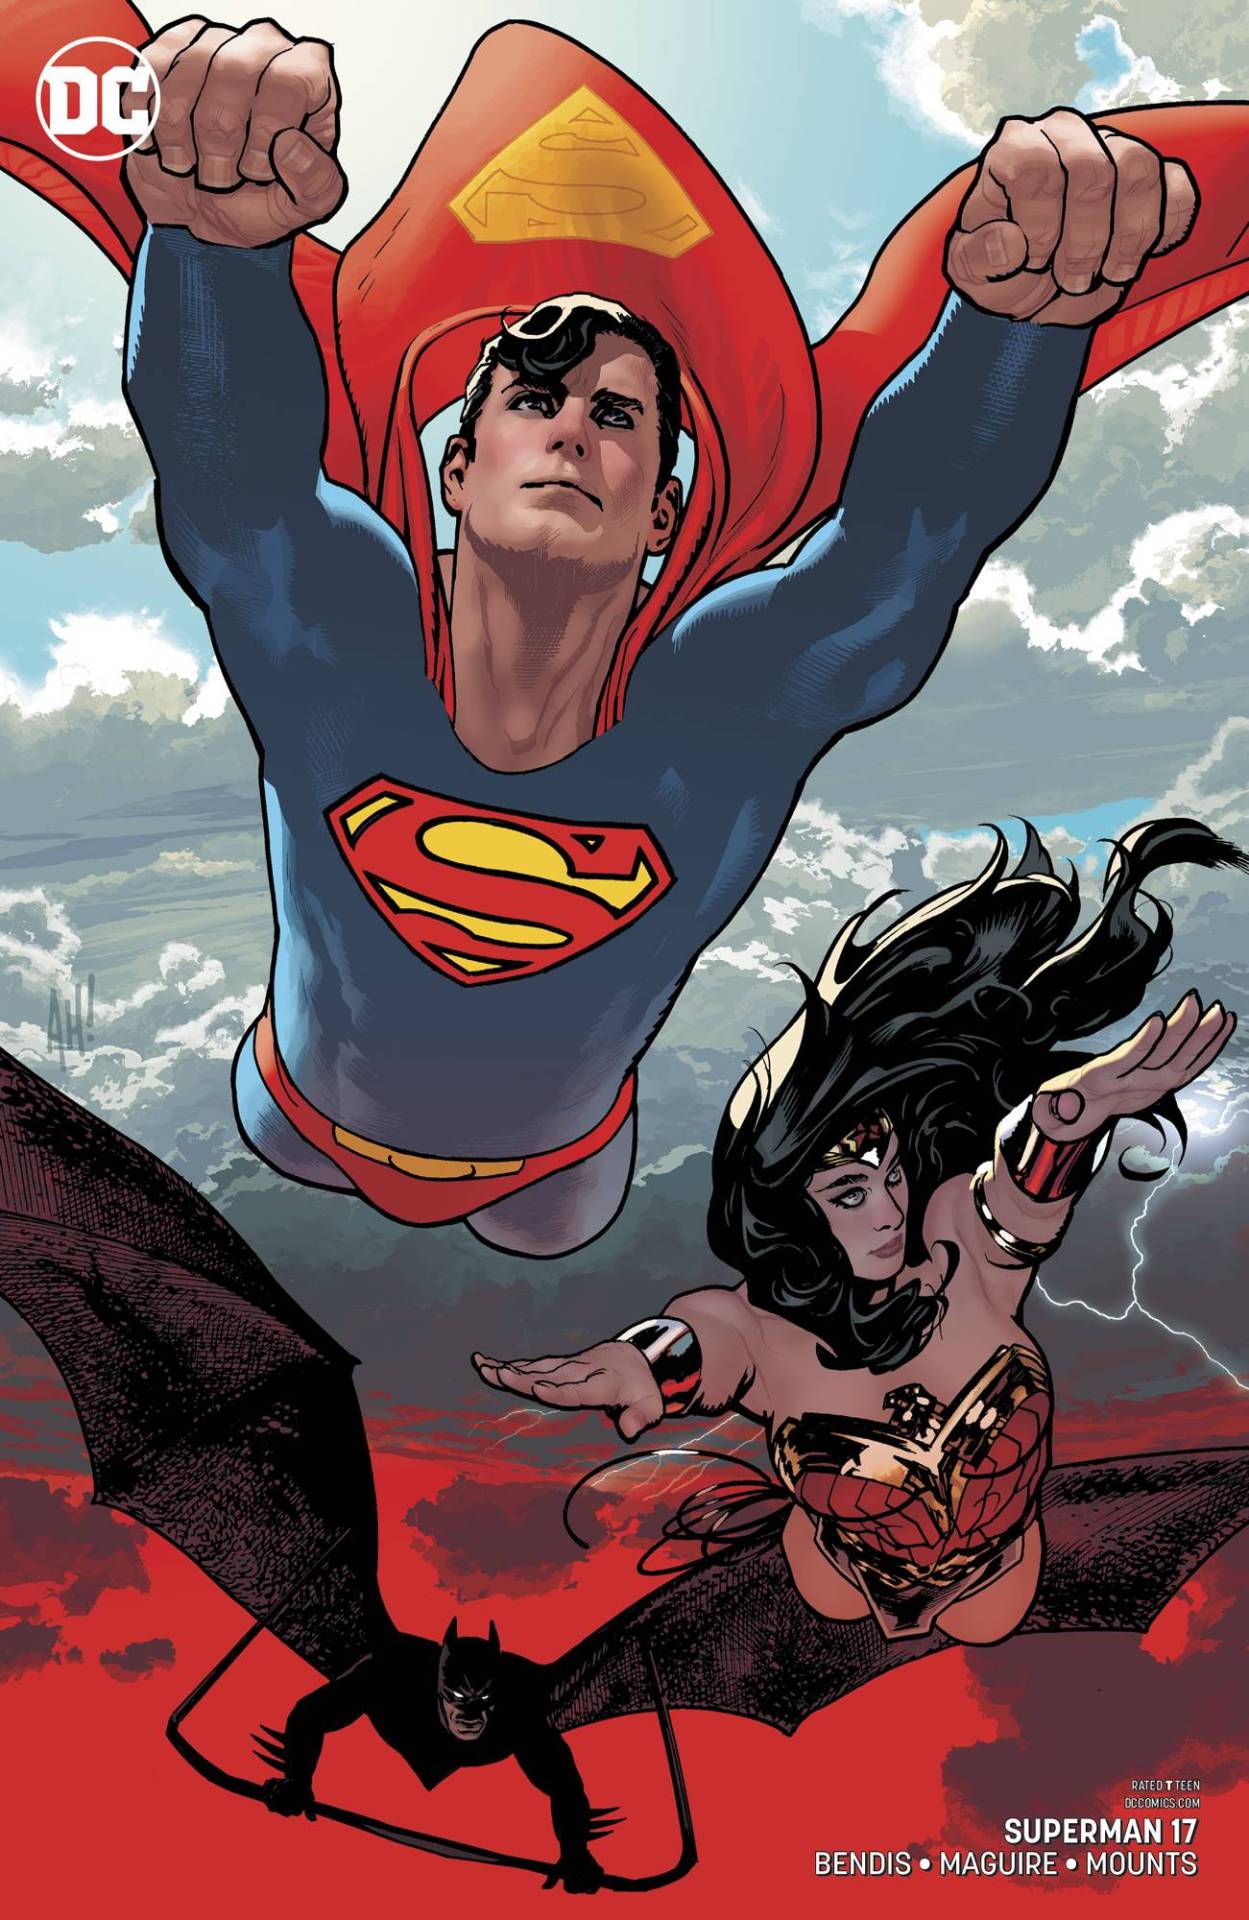 #superman#adam hughes#dc trinity#batman#wonder woman